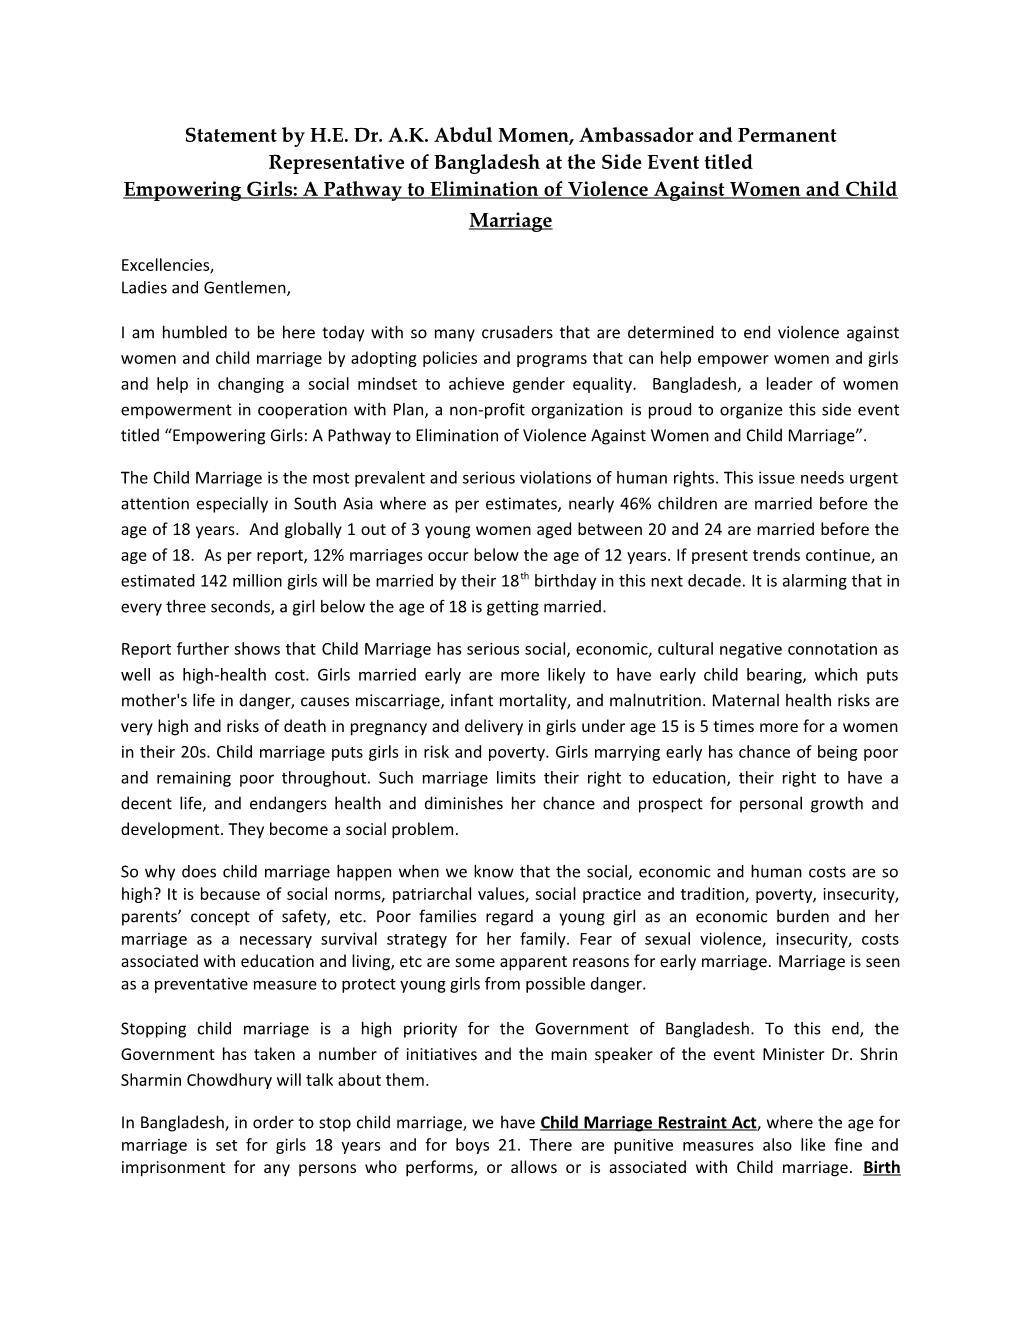 Statement by H.E. Dr. A.K. Abdul Momen, Ambassador and Permanent Representative of Bangladesh